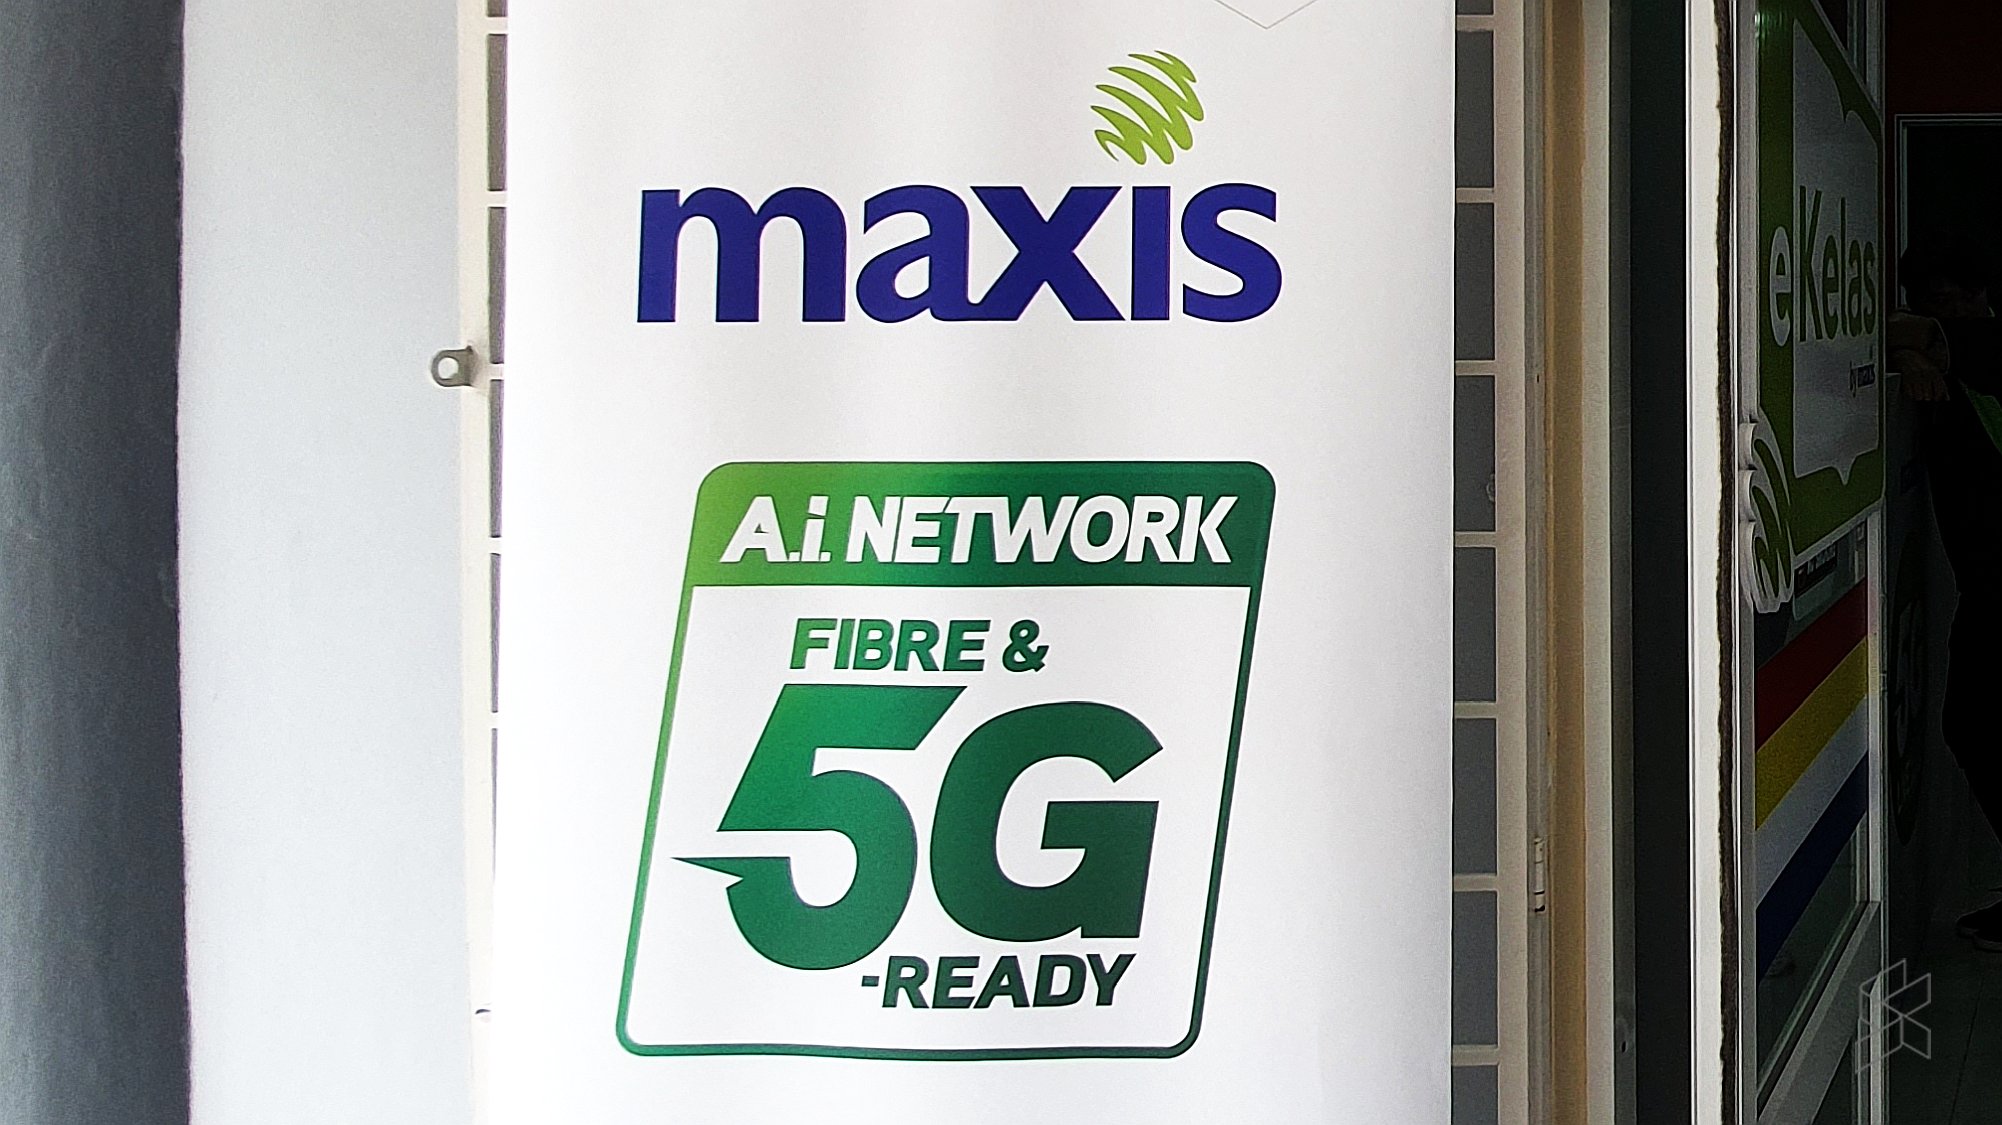 Maxis Postpaid Unlimited Data / Hotlink Postpaid Flex Plus now comes